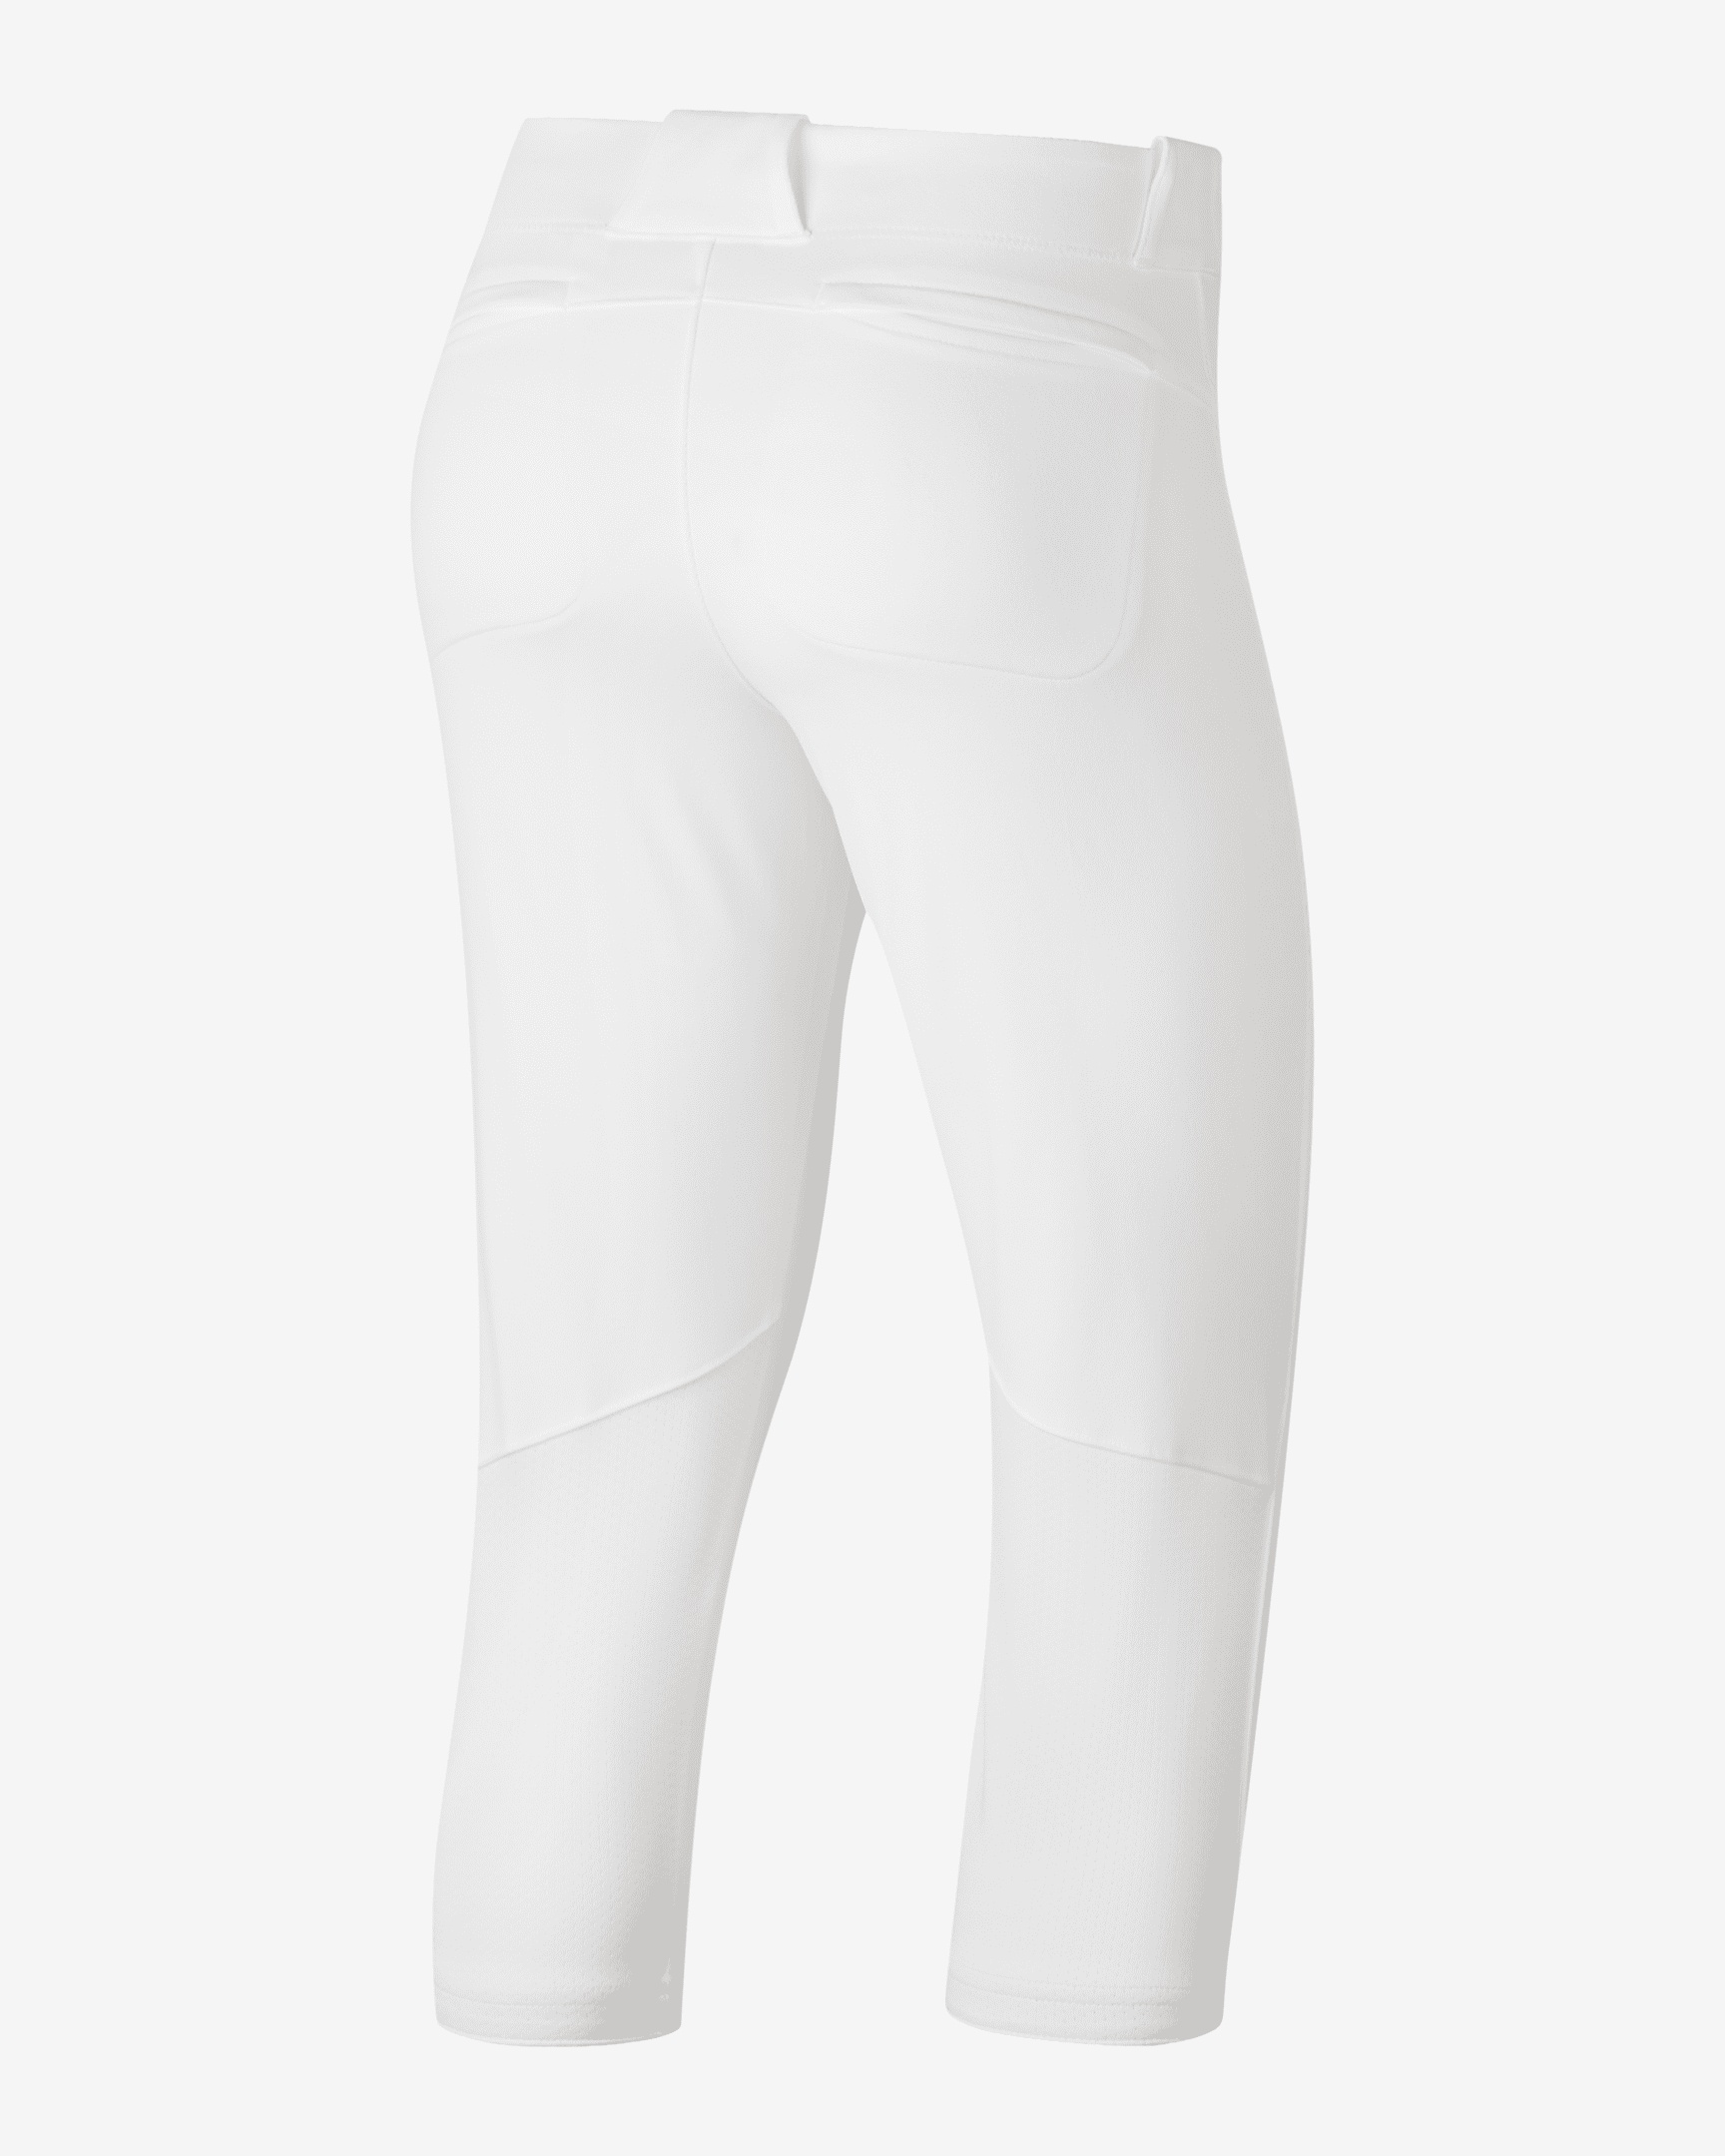 Nike Women's Vapor Select 3/4-Length Softball Pants - 2